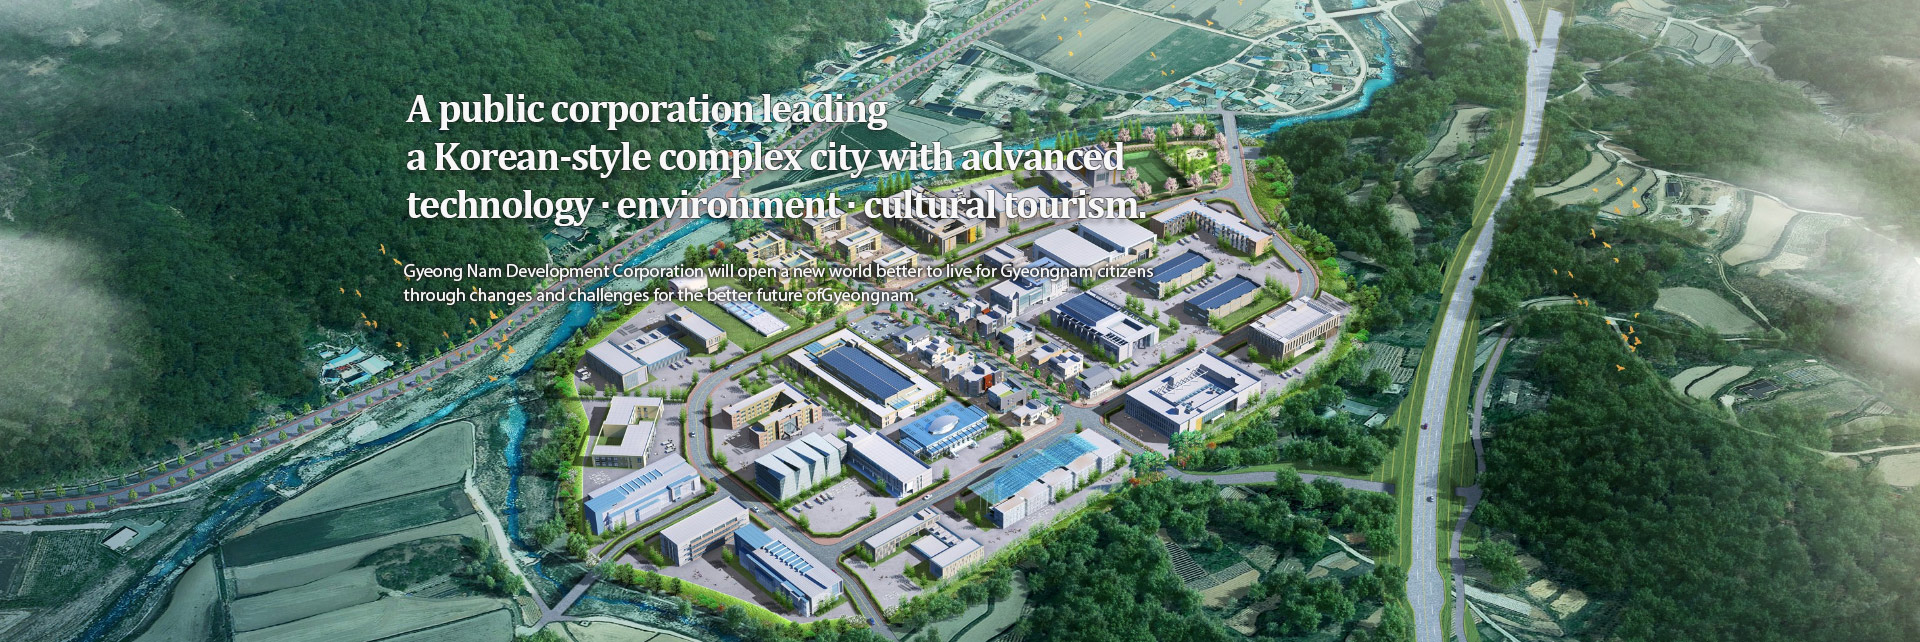 A public corporation leading a Korean-style complex city with advanced technology · environment · cultural tourism